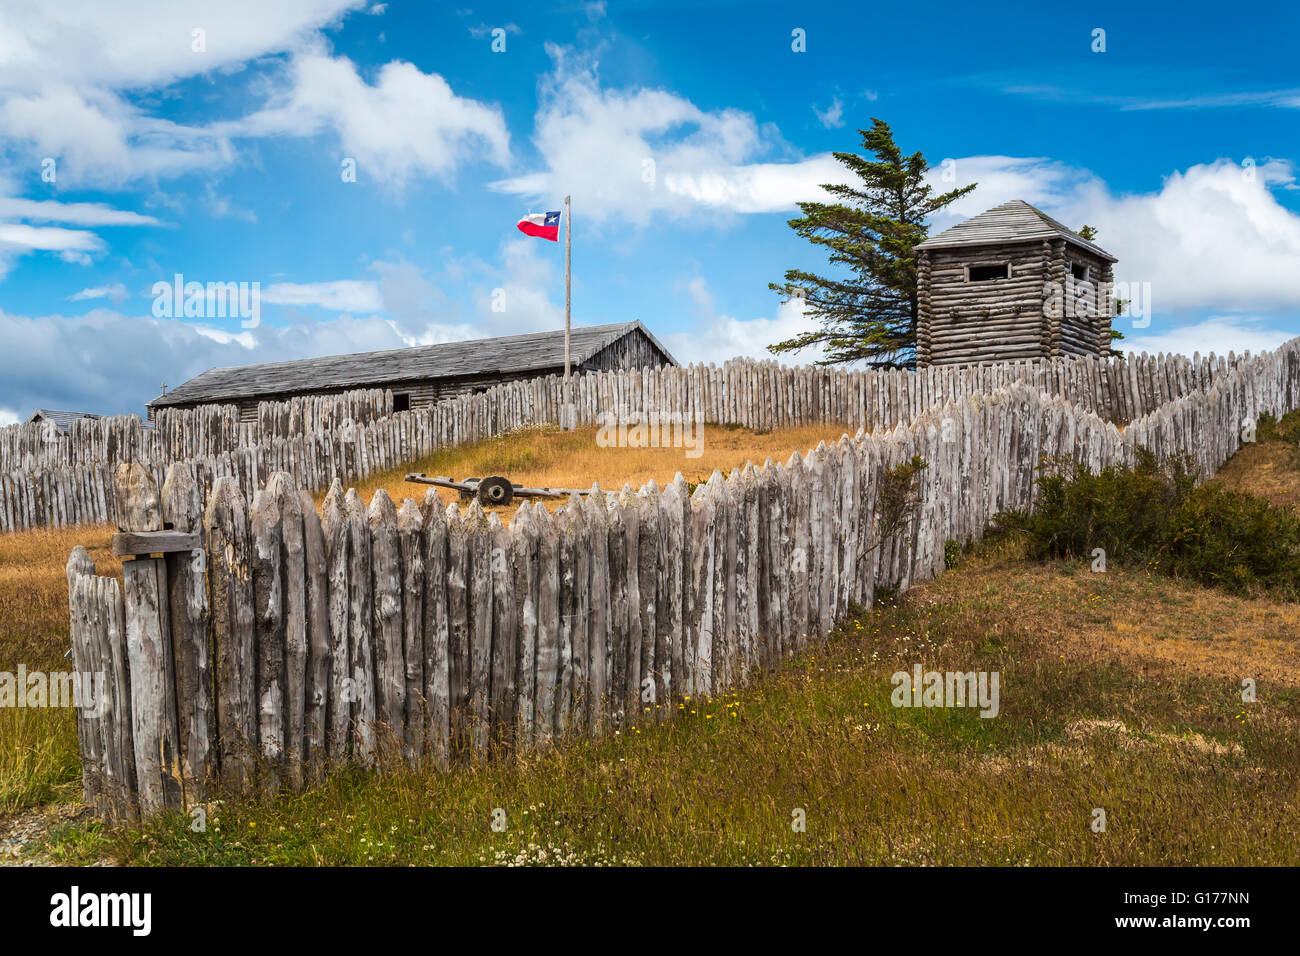 Fuerte Bulnes fort on the Strait of Magellan near Punta Arenas, Chile, South America. Stock Photo